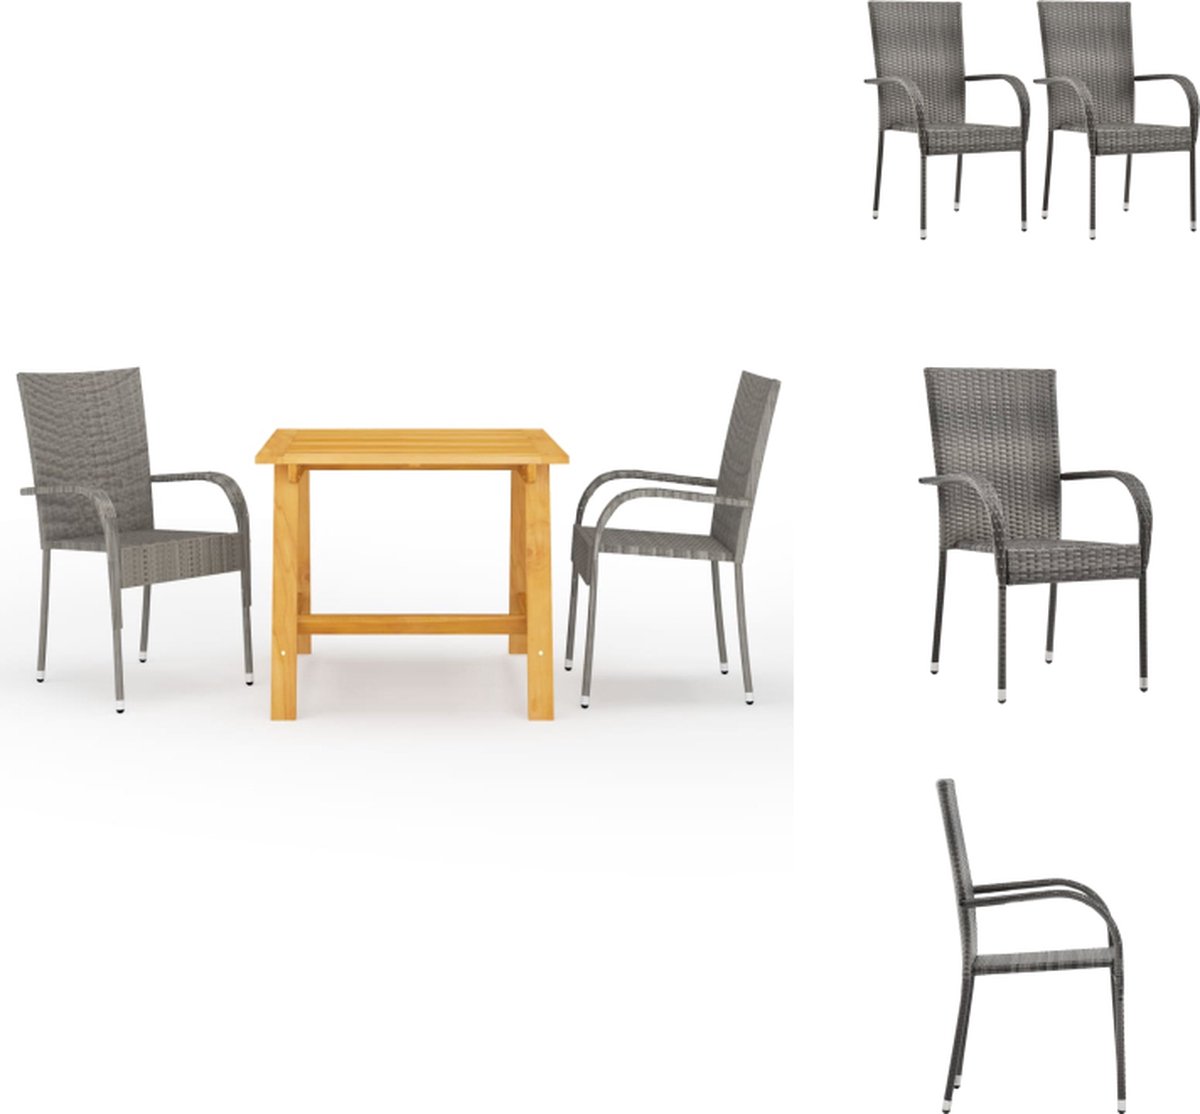 VidaXL Tuinset Acaciahouten eettafel PE-rattan stoelen Grijs 88x88x74 cm (LxBxH) 55.5x53.5x95 cm (BxDxH) Montage vereist 1 tafel 2 stoelen Tuinset